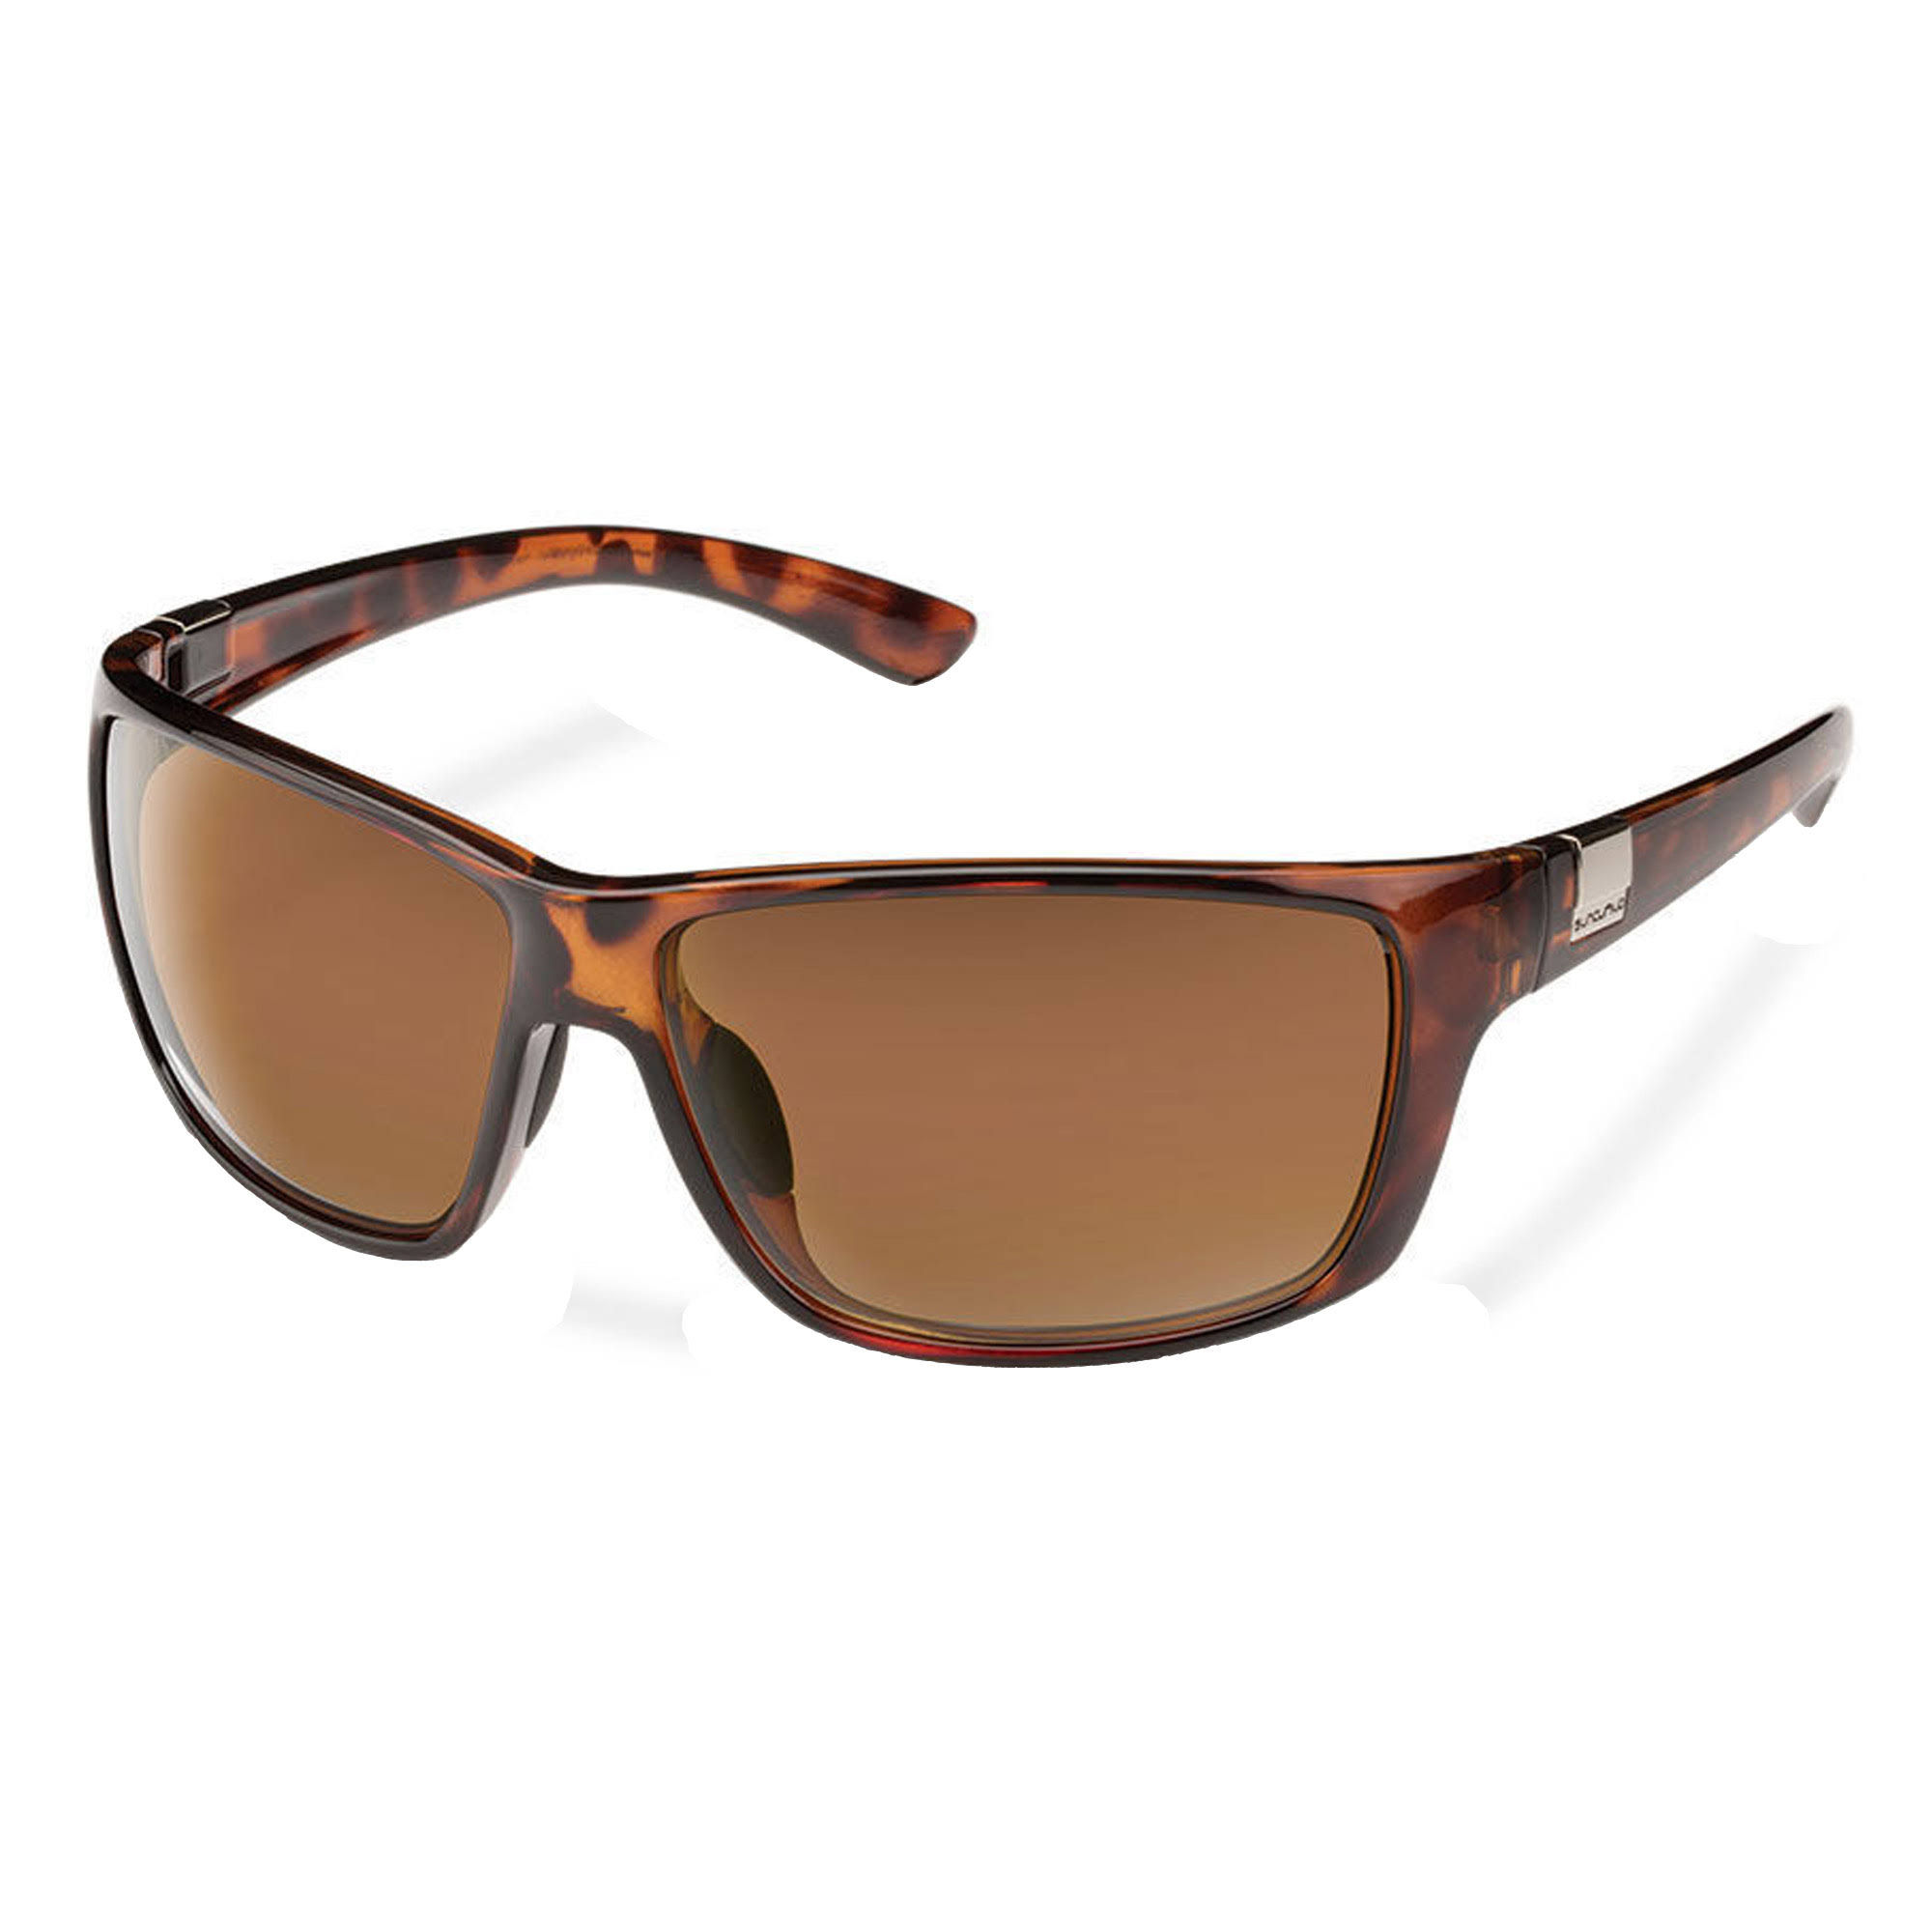 Suncloud Councilman Polarized Sunglasses - Tortoise Frame, Brown Lens